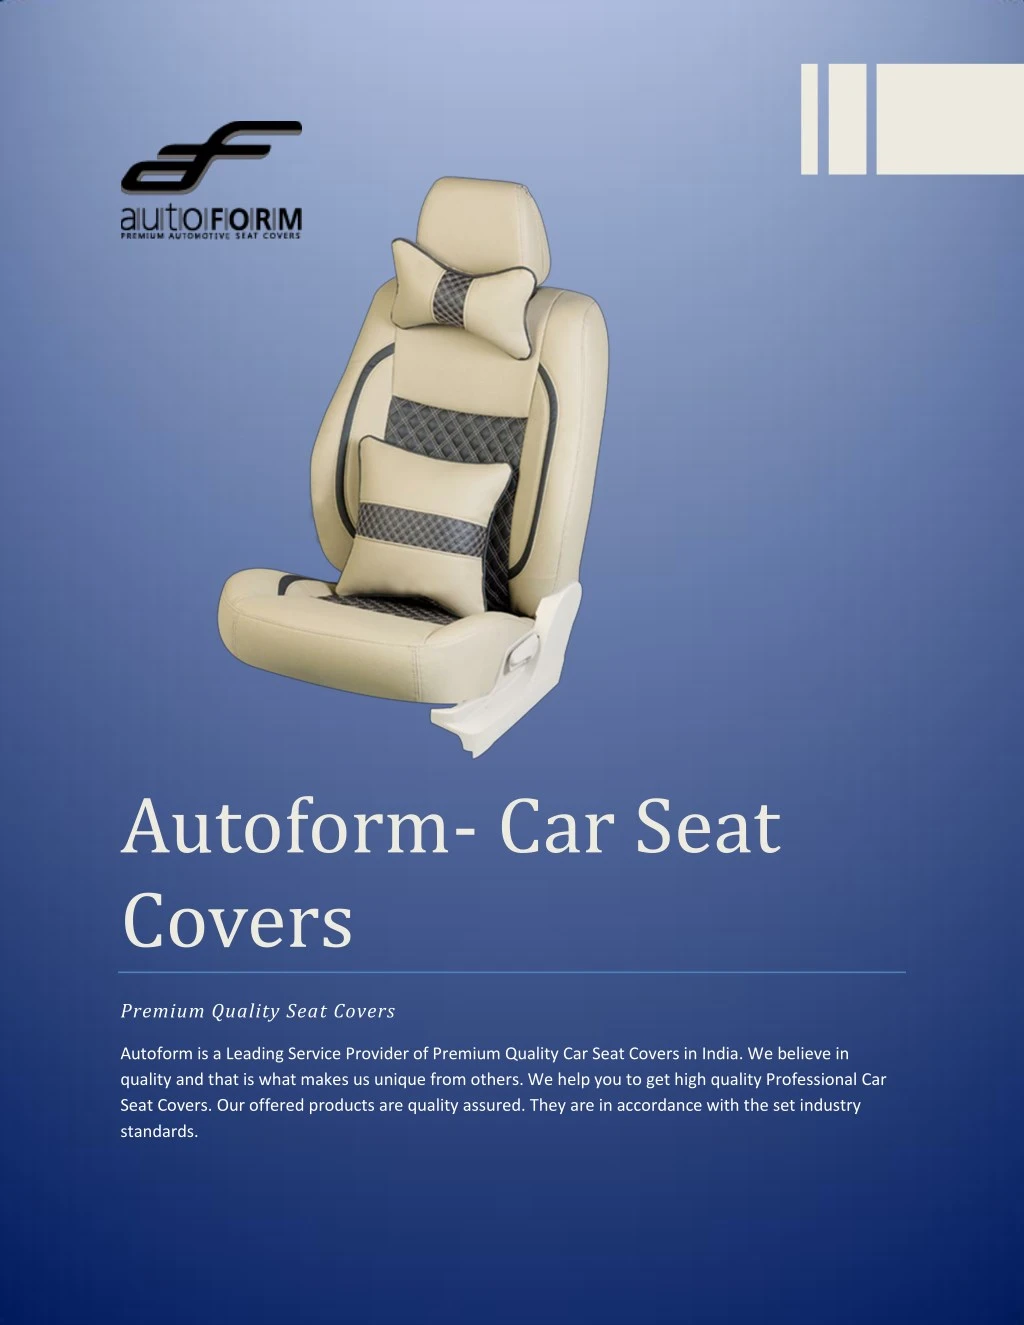 autoform car seat covers